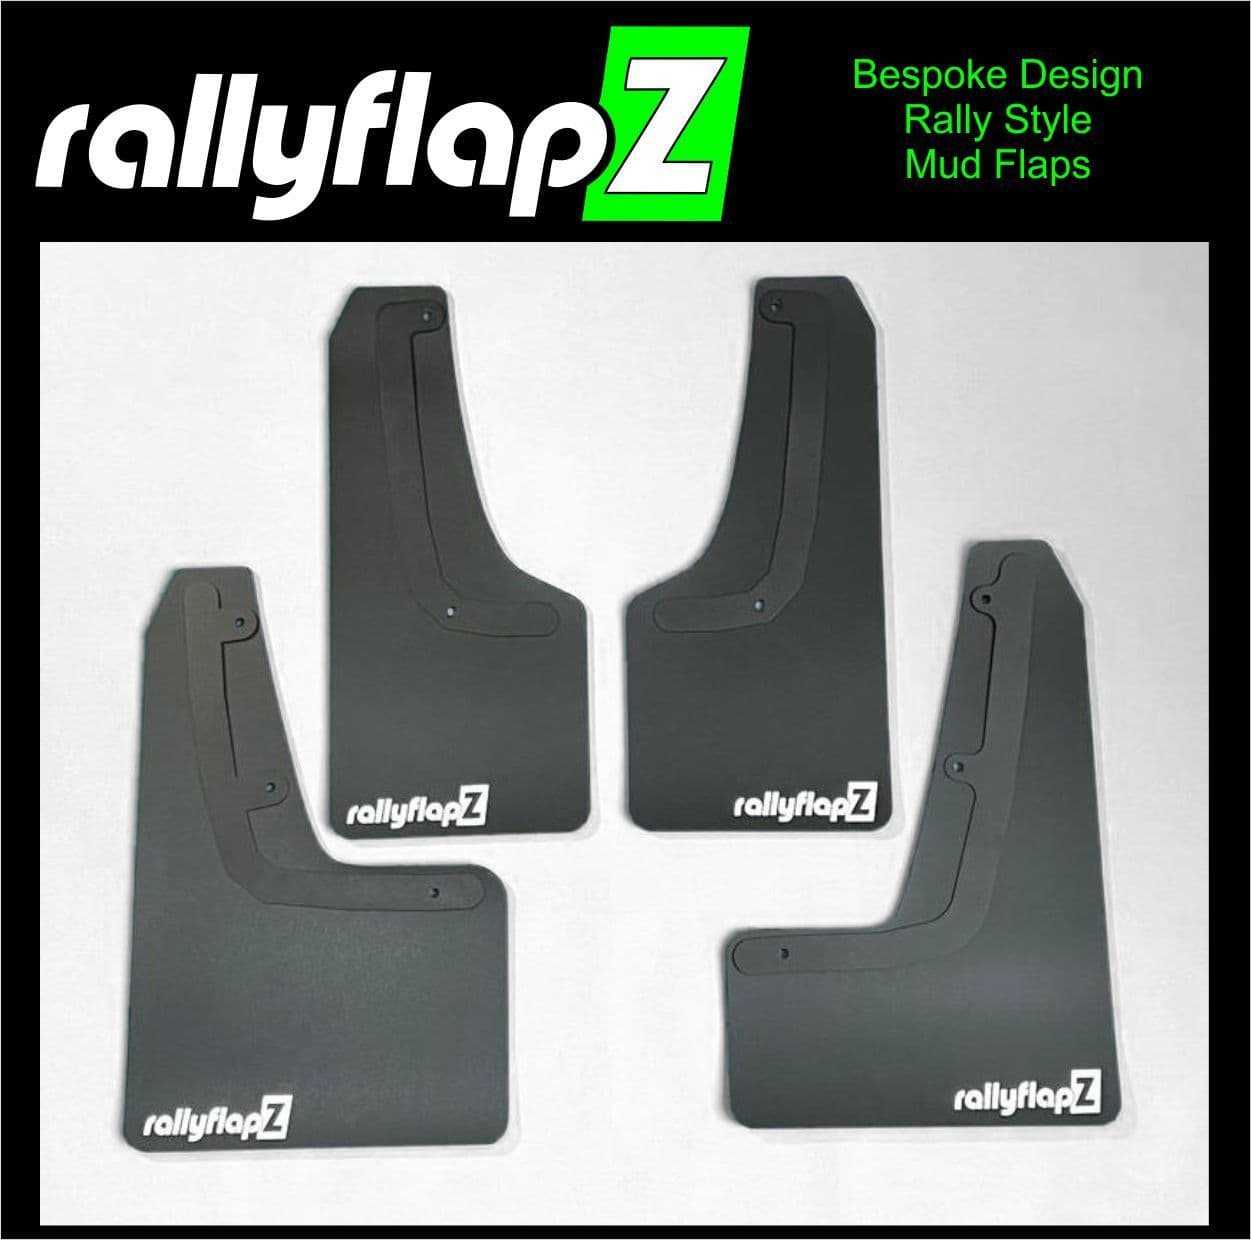 Rally Flapz, VW Tiguan R / R-Line 2nd Gen 2016+ BLACK MUDFLAPS